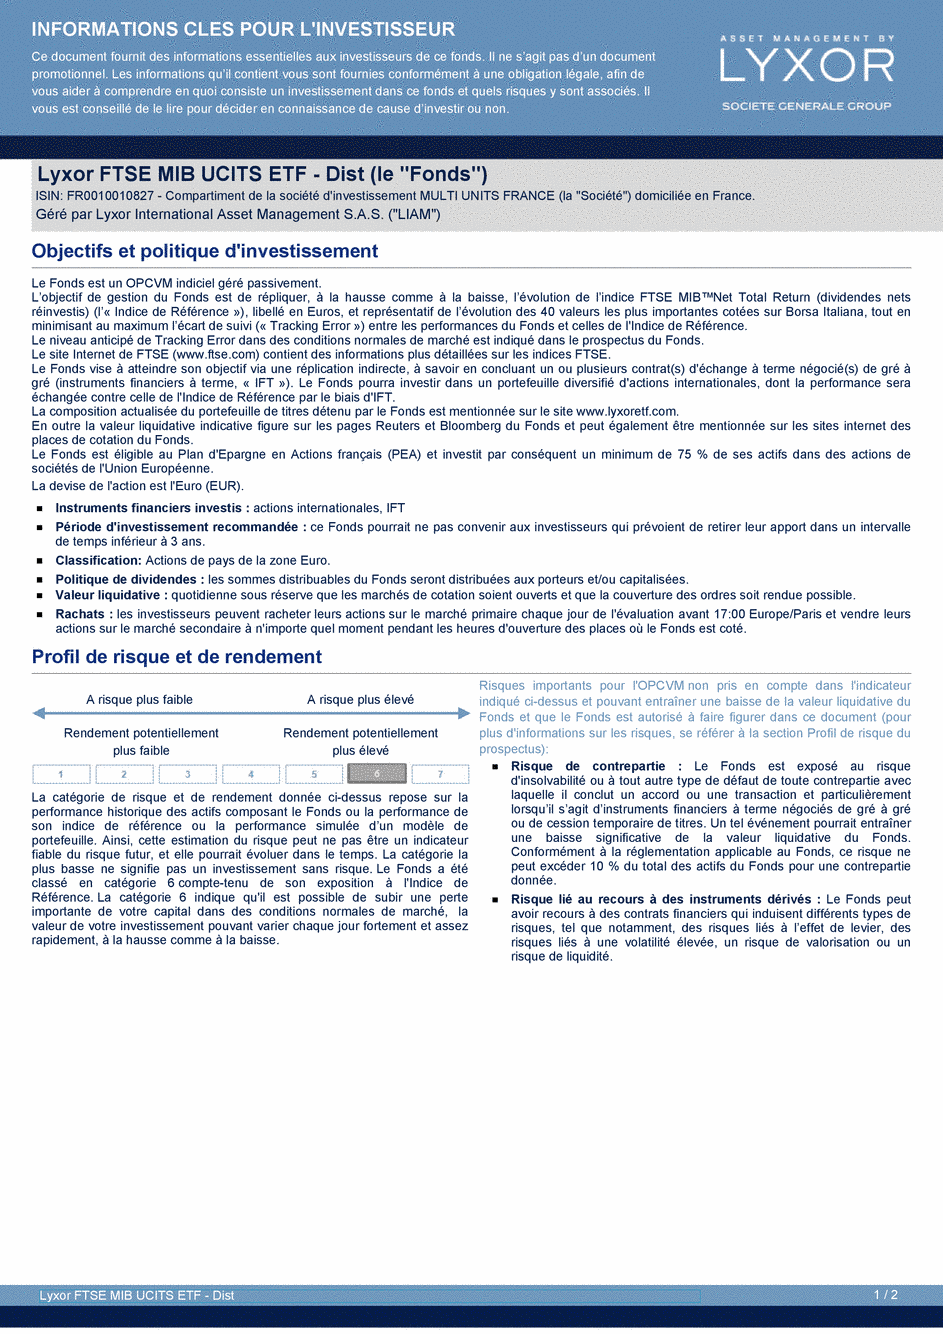 DICI Lyxor FTSE MIB UCITS ETF - Dist - 19/02/2020 - Français